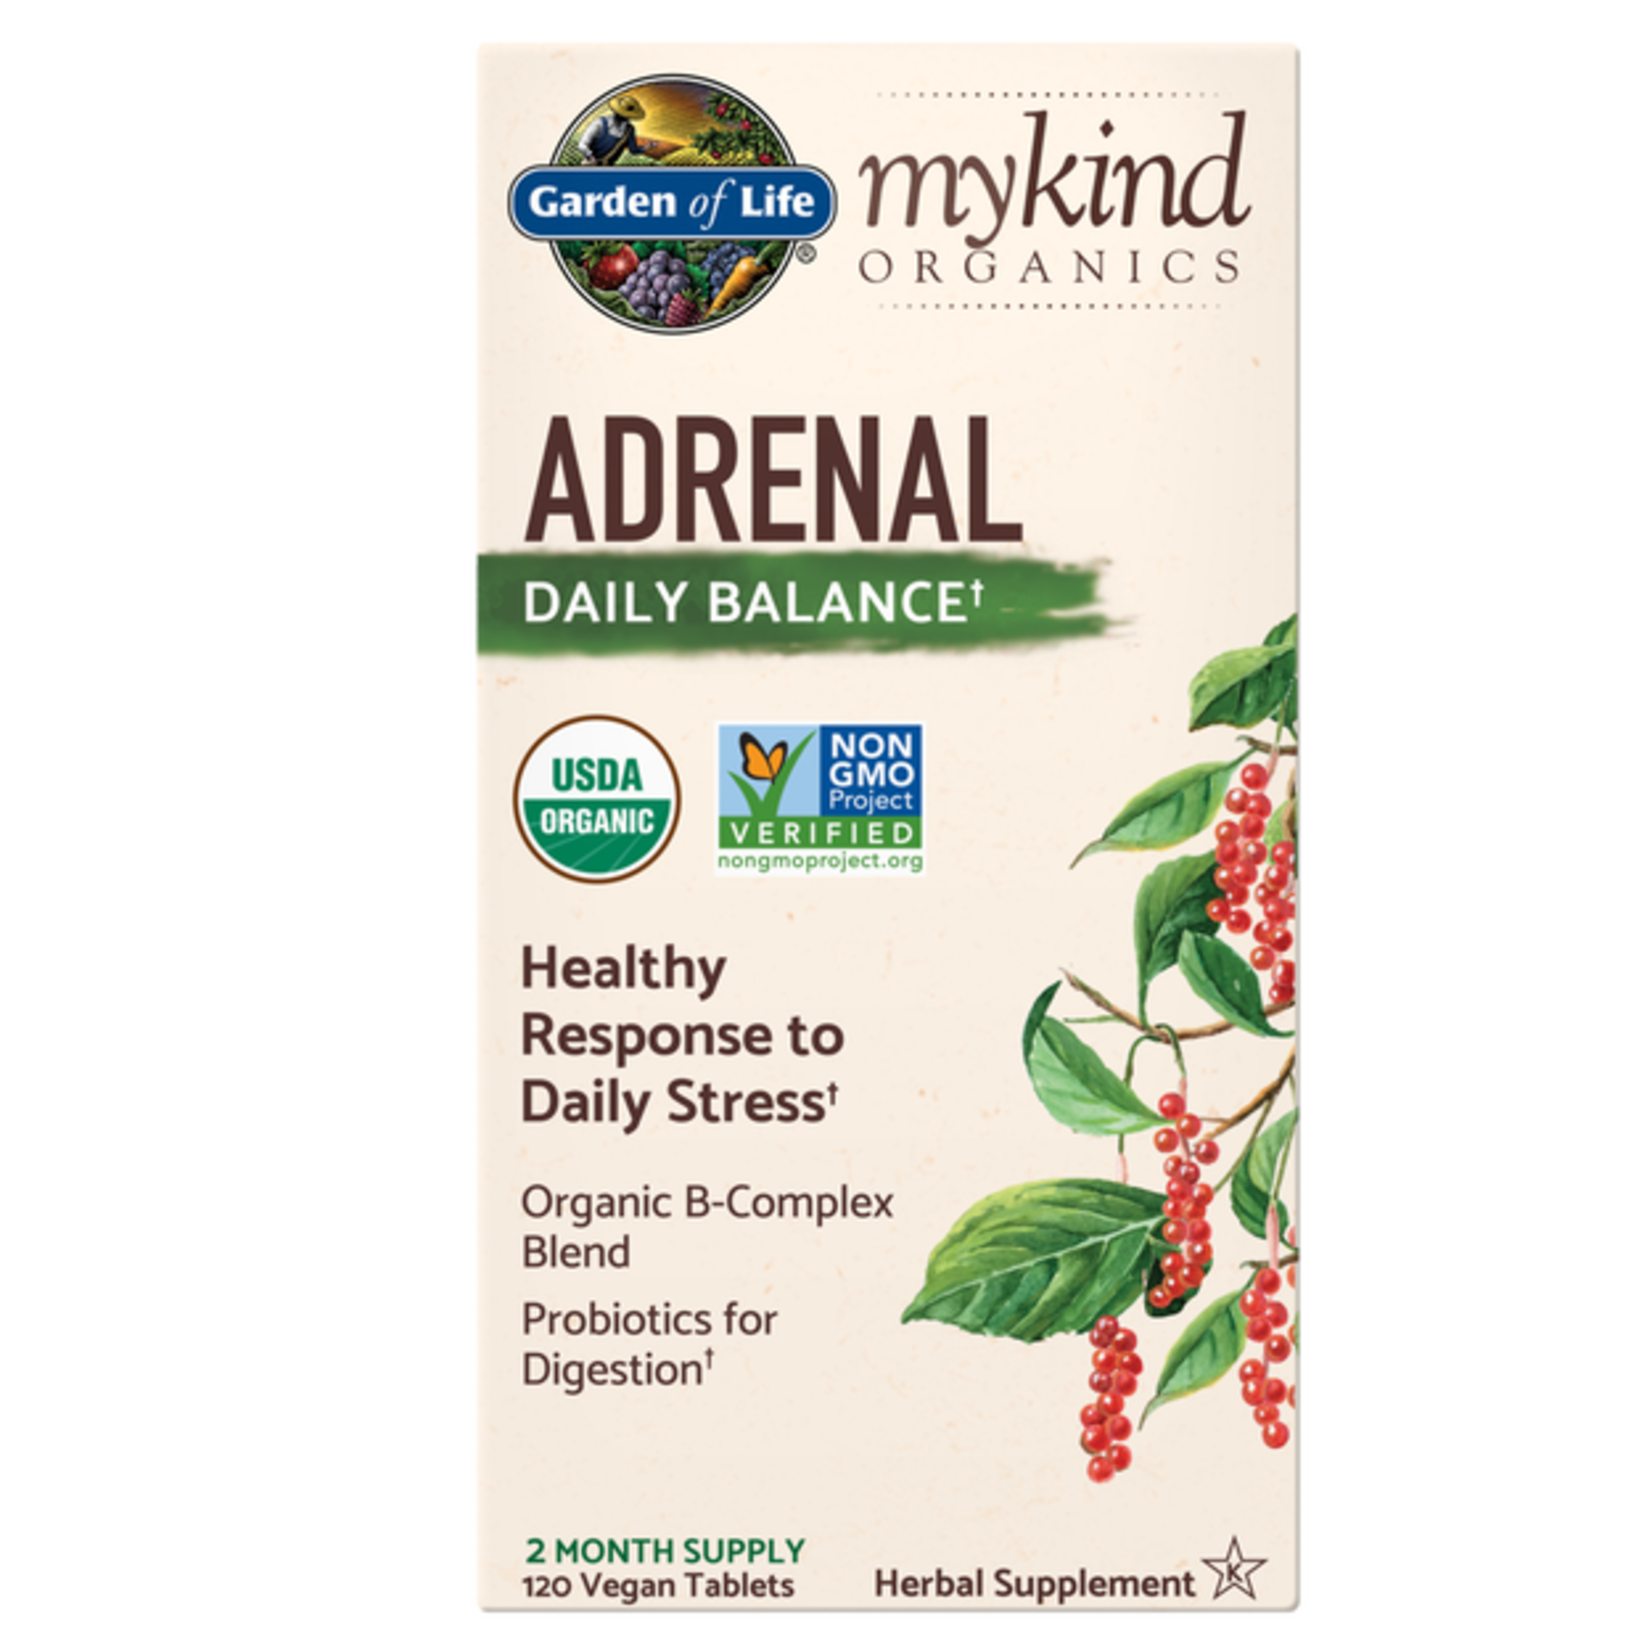 Garden of Life Garden Of Life - Mykind Organics Adrenal Daily Balance - 120 Veg Tablets